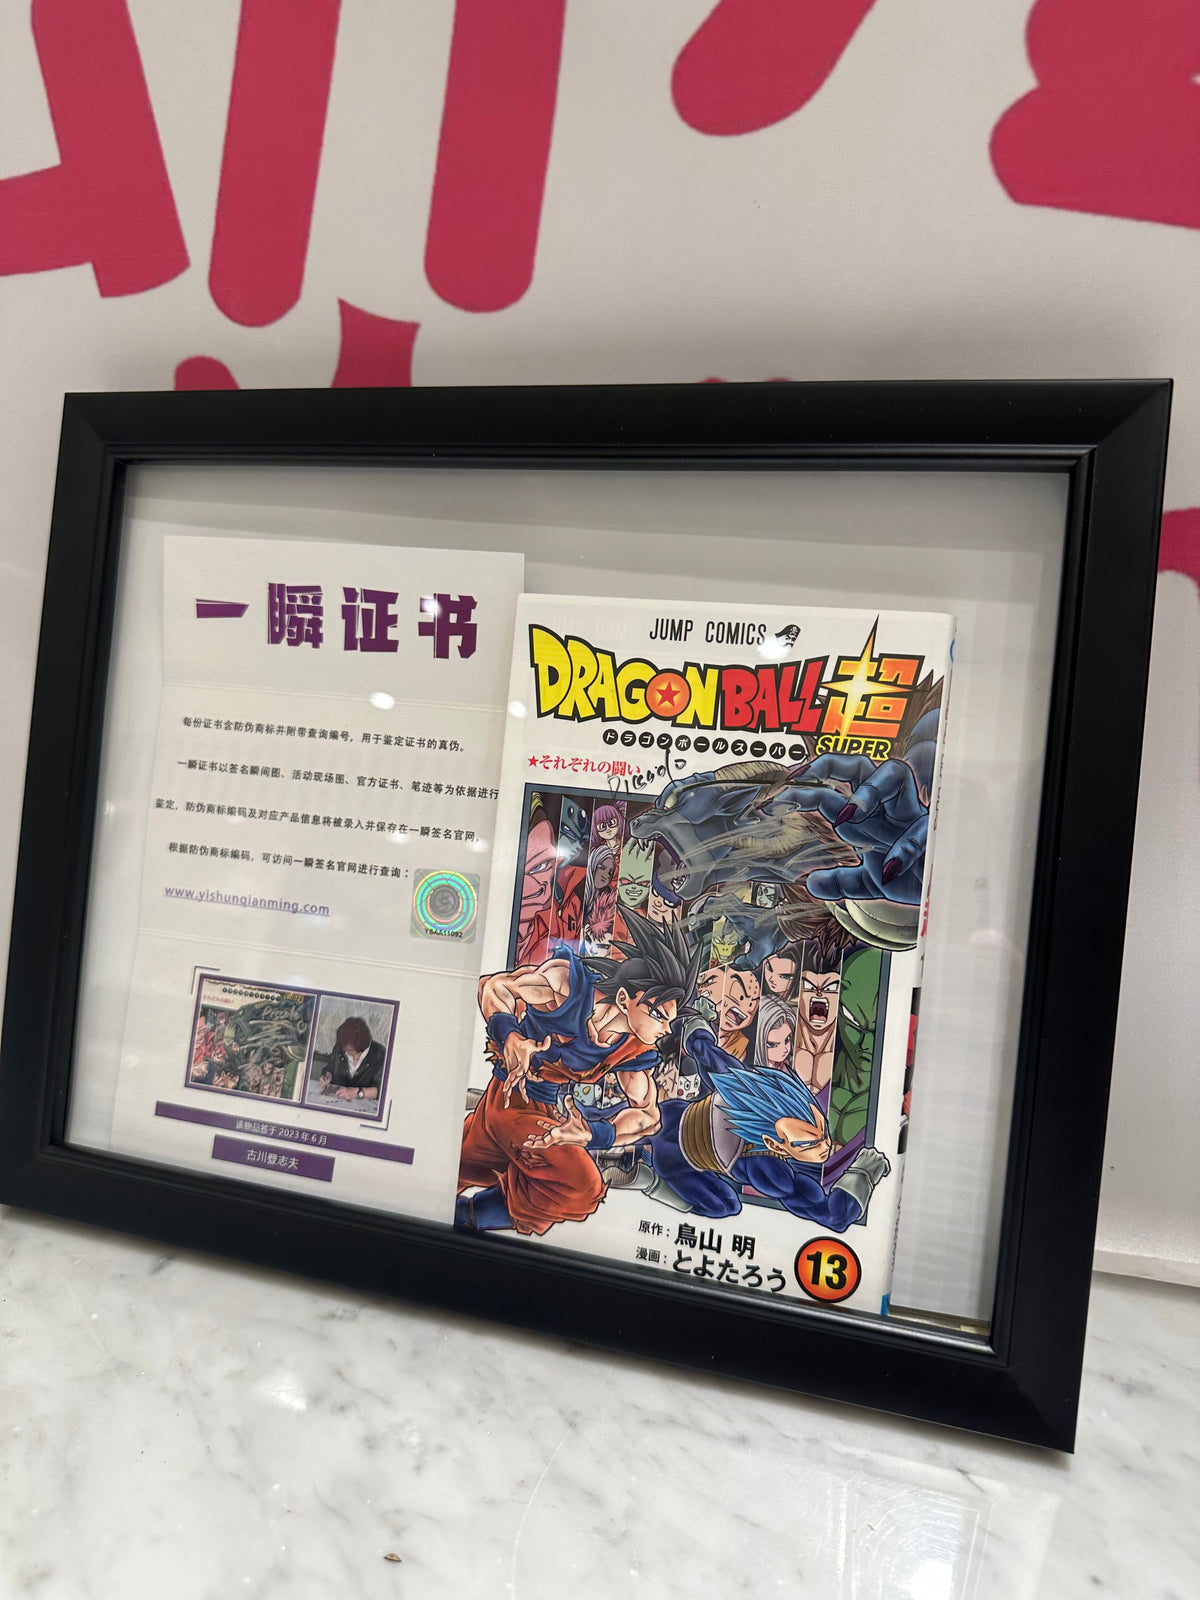 Furukawa Toshio (Voice Actor of Piccolo from Dragon Ball) autograph on Dragon Ball Comic Book